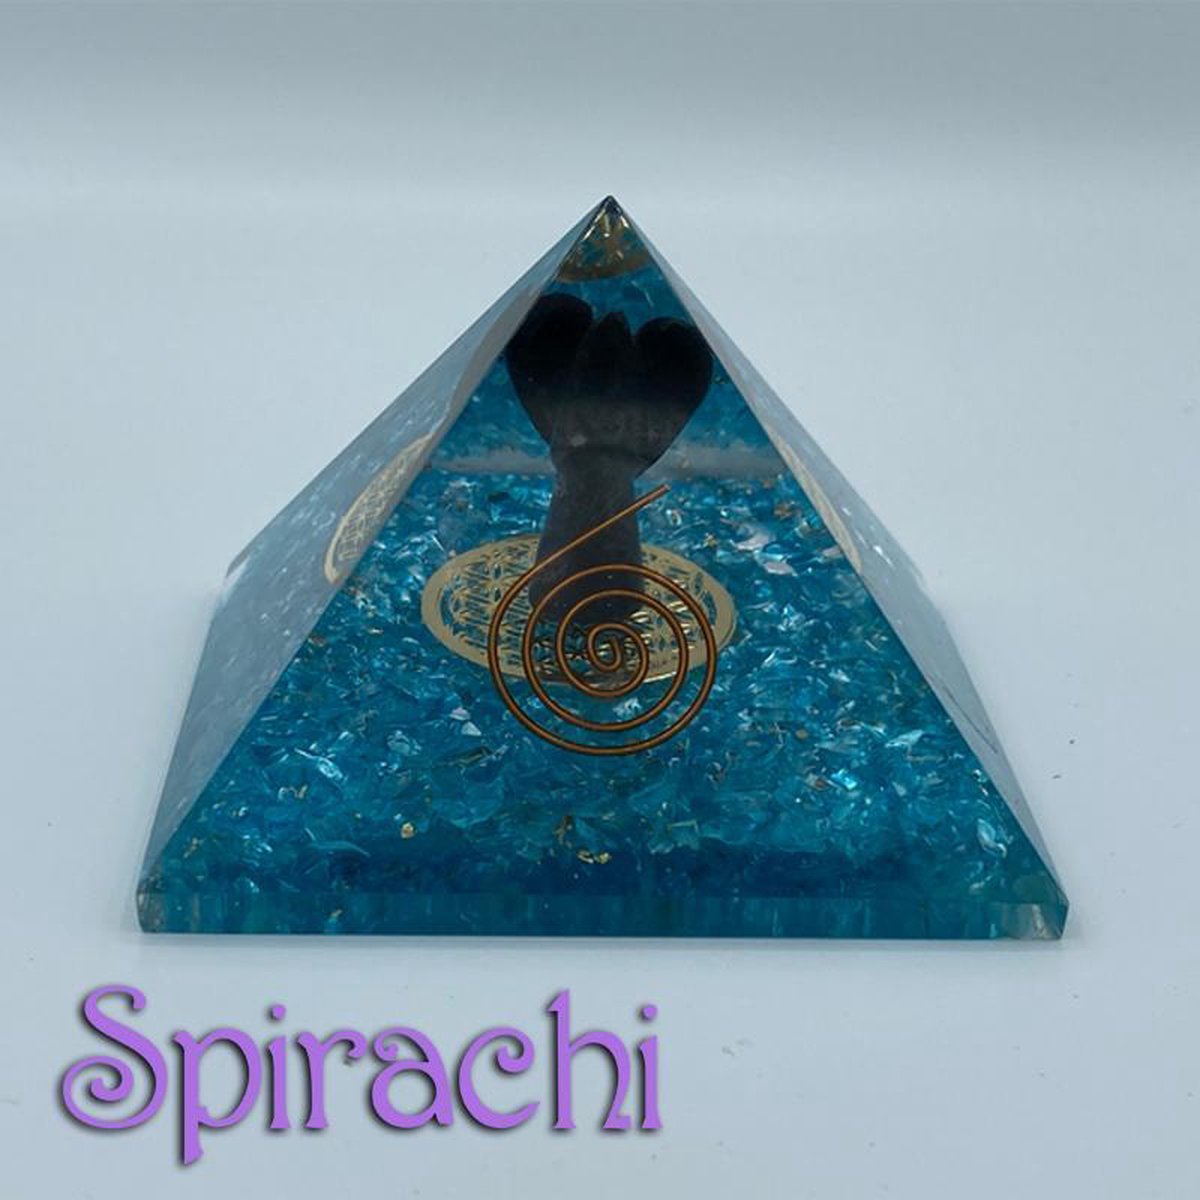 Spirachi - Blue Agate orgonite piramide met engel